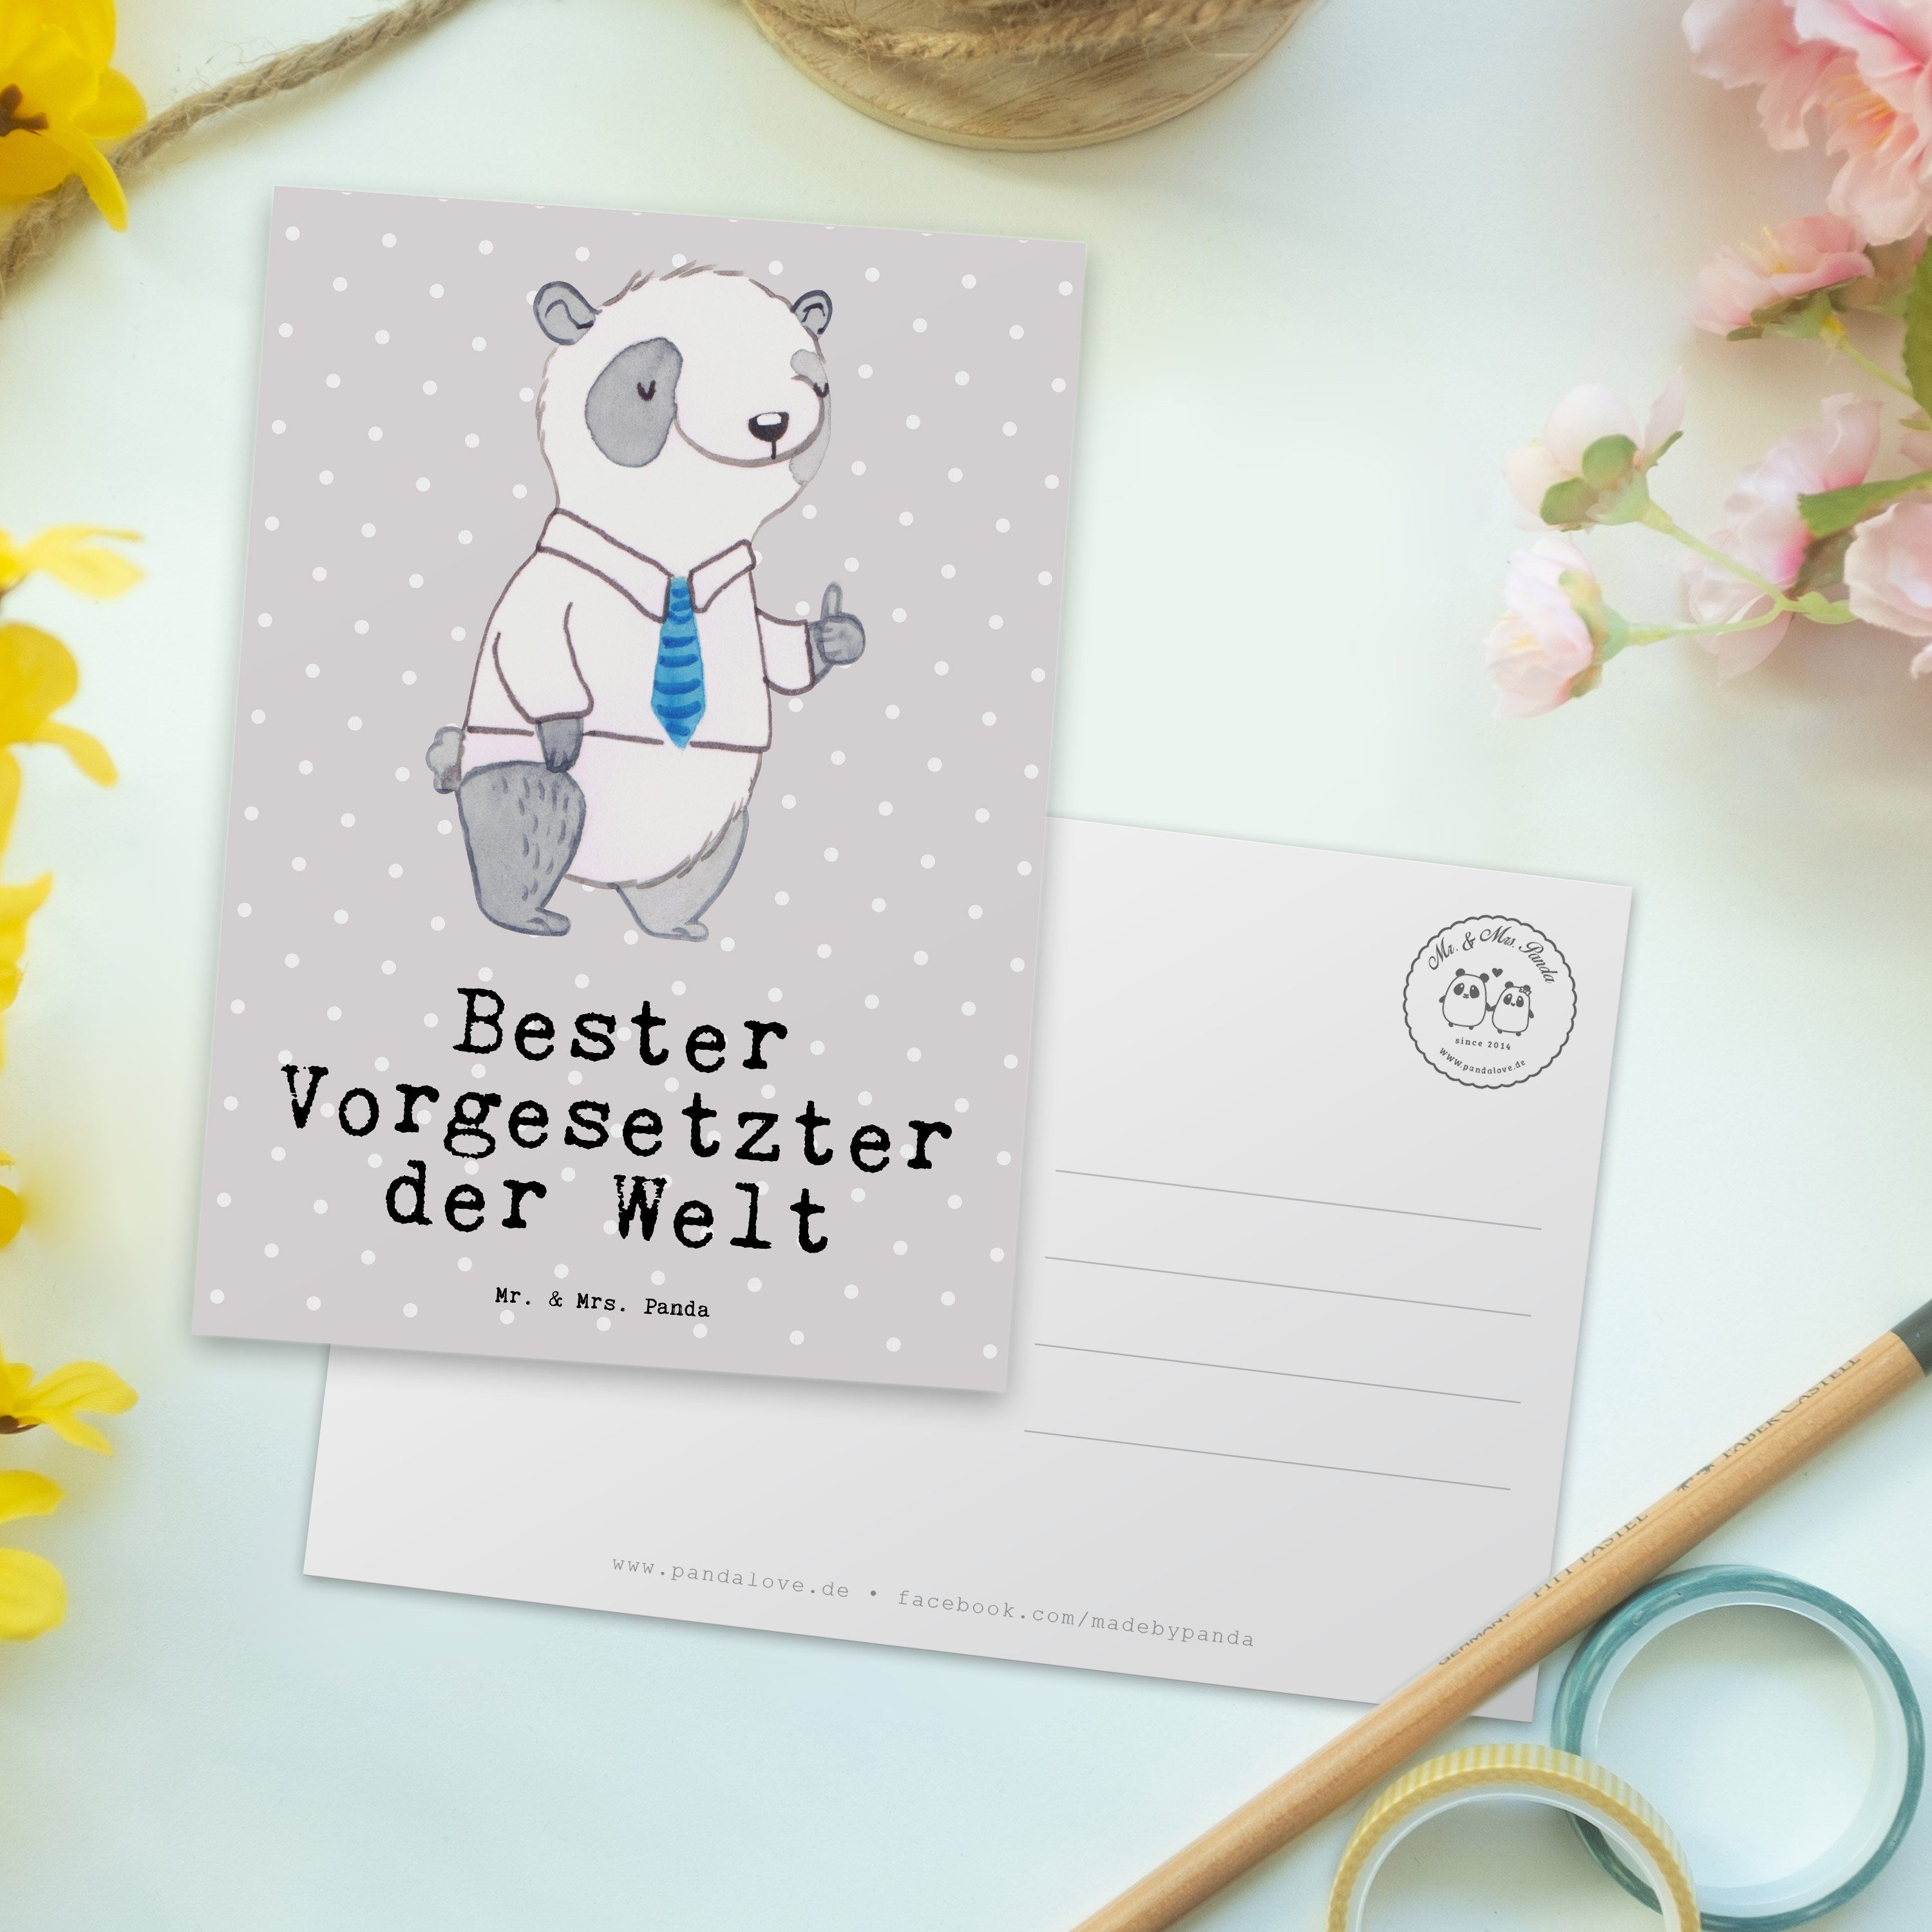 & Geschenk, Mr. Pastell Vorgesetzter Postkarte - Grau der Welt - Panda Panda Mrs. Bester Dankesc